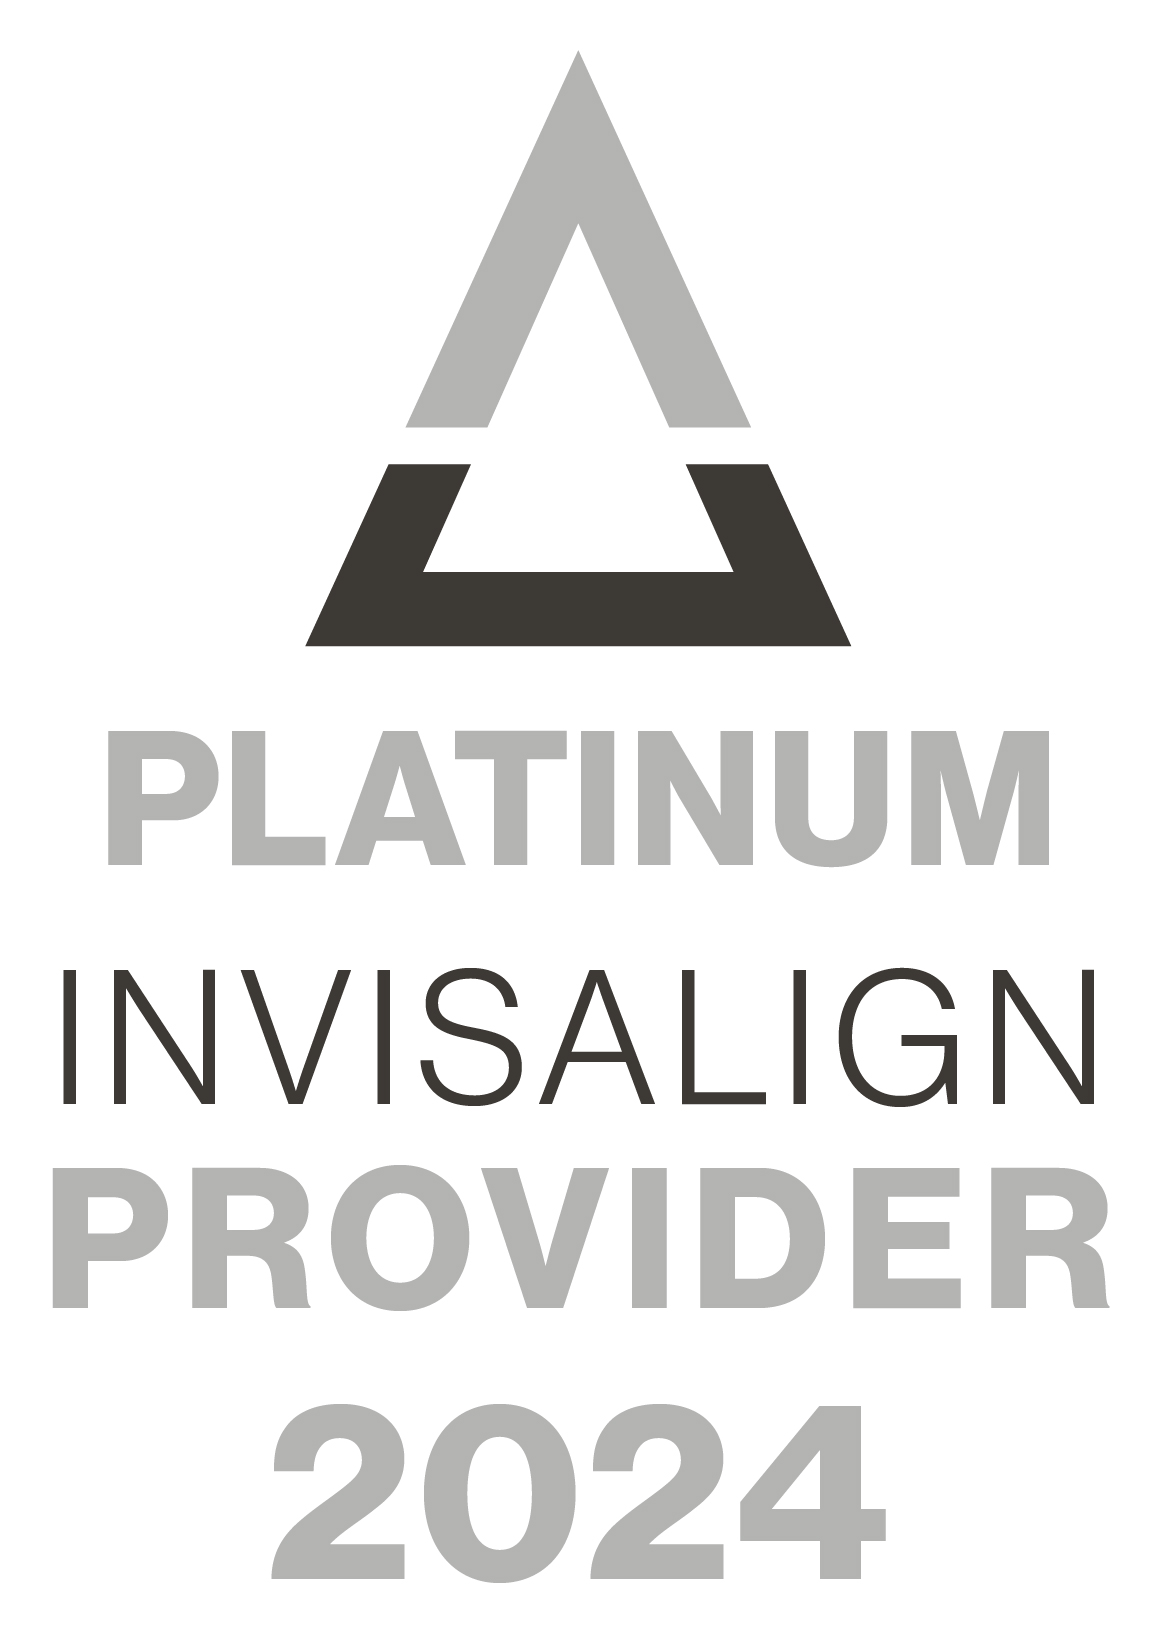 Platinum Invisalign Provider 2024 logo